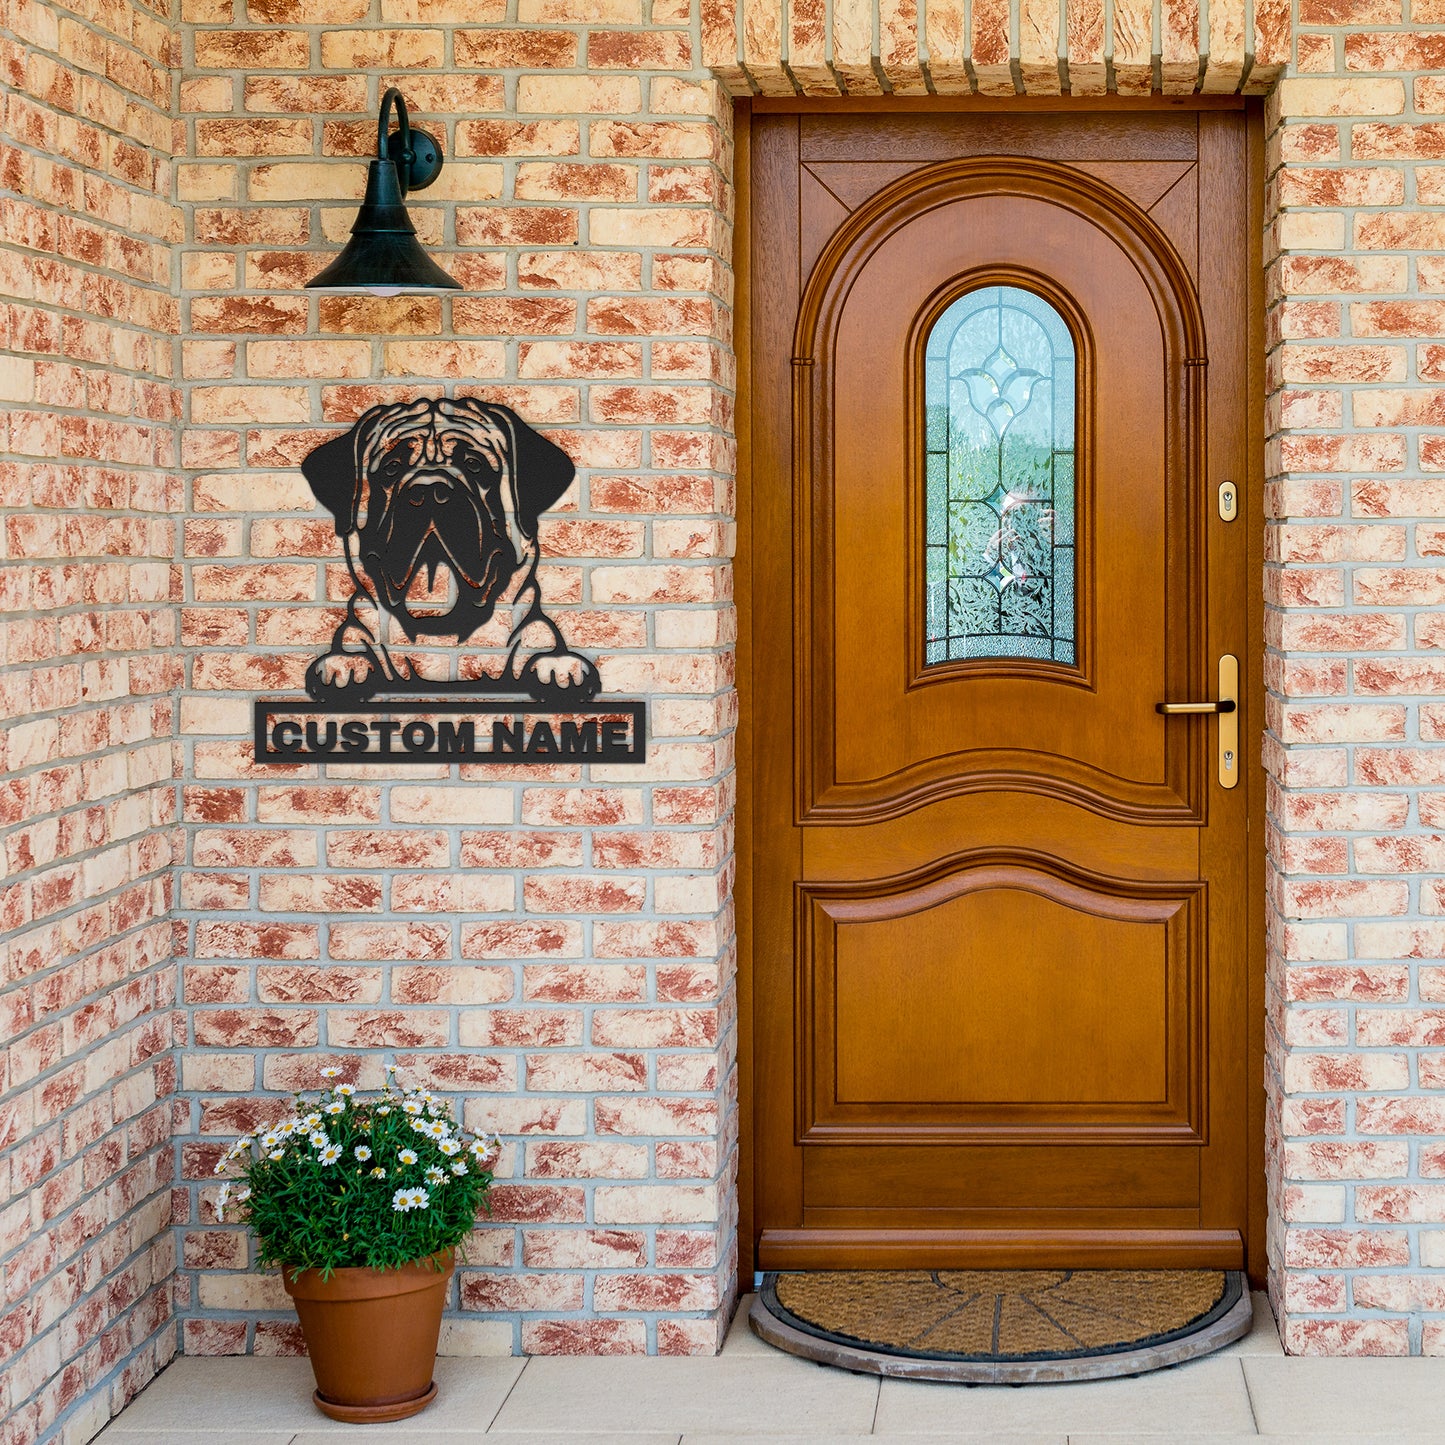 Personalized Mastiff Dog Metal Sign - Mastiff Custom Name Wall Decor, Metal Signs Customized Outdoor Indoor, Wall Art Gift For Mastiff Dog Lover